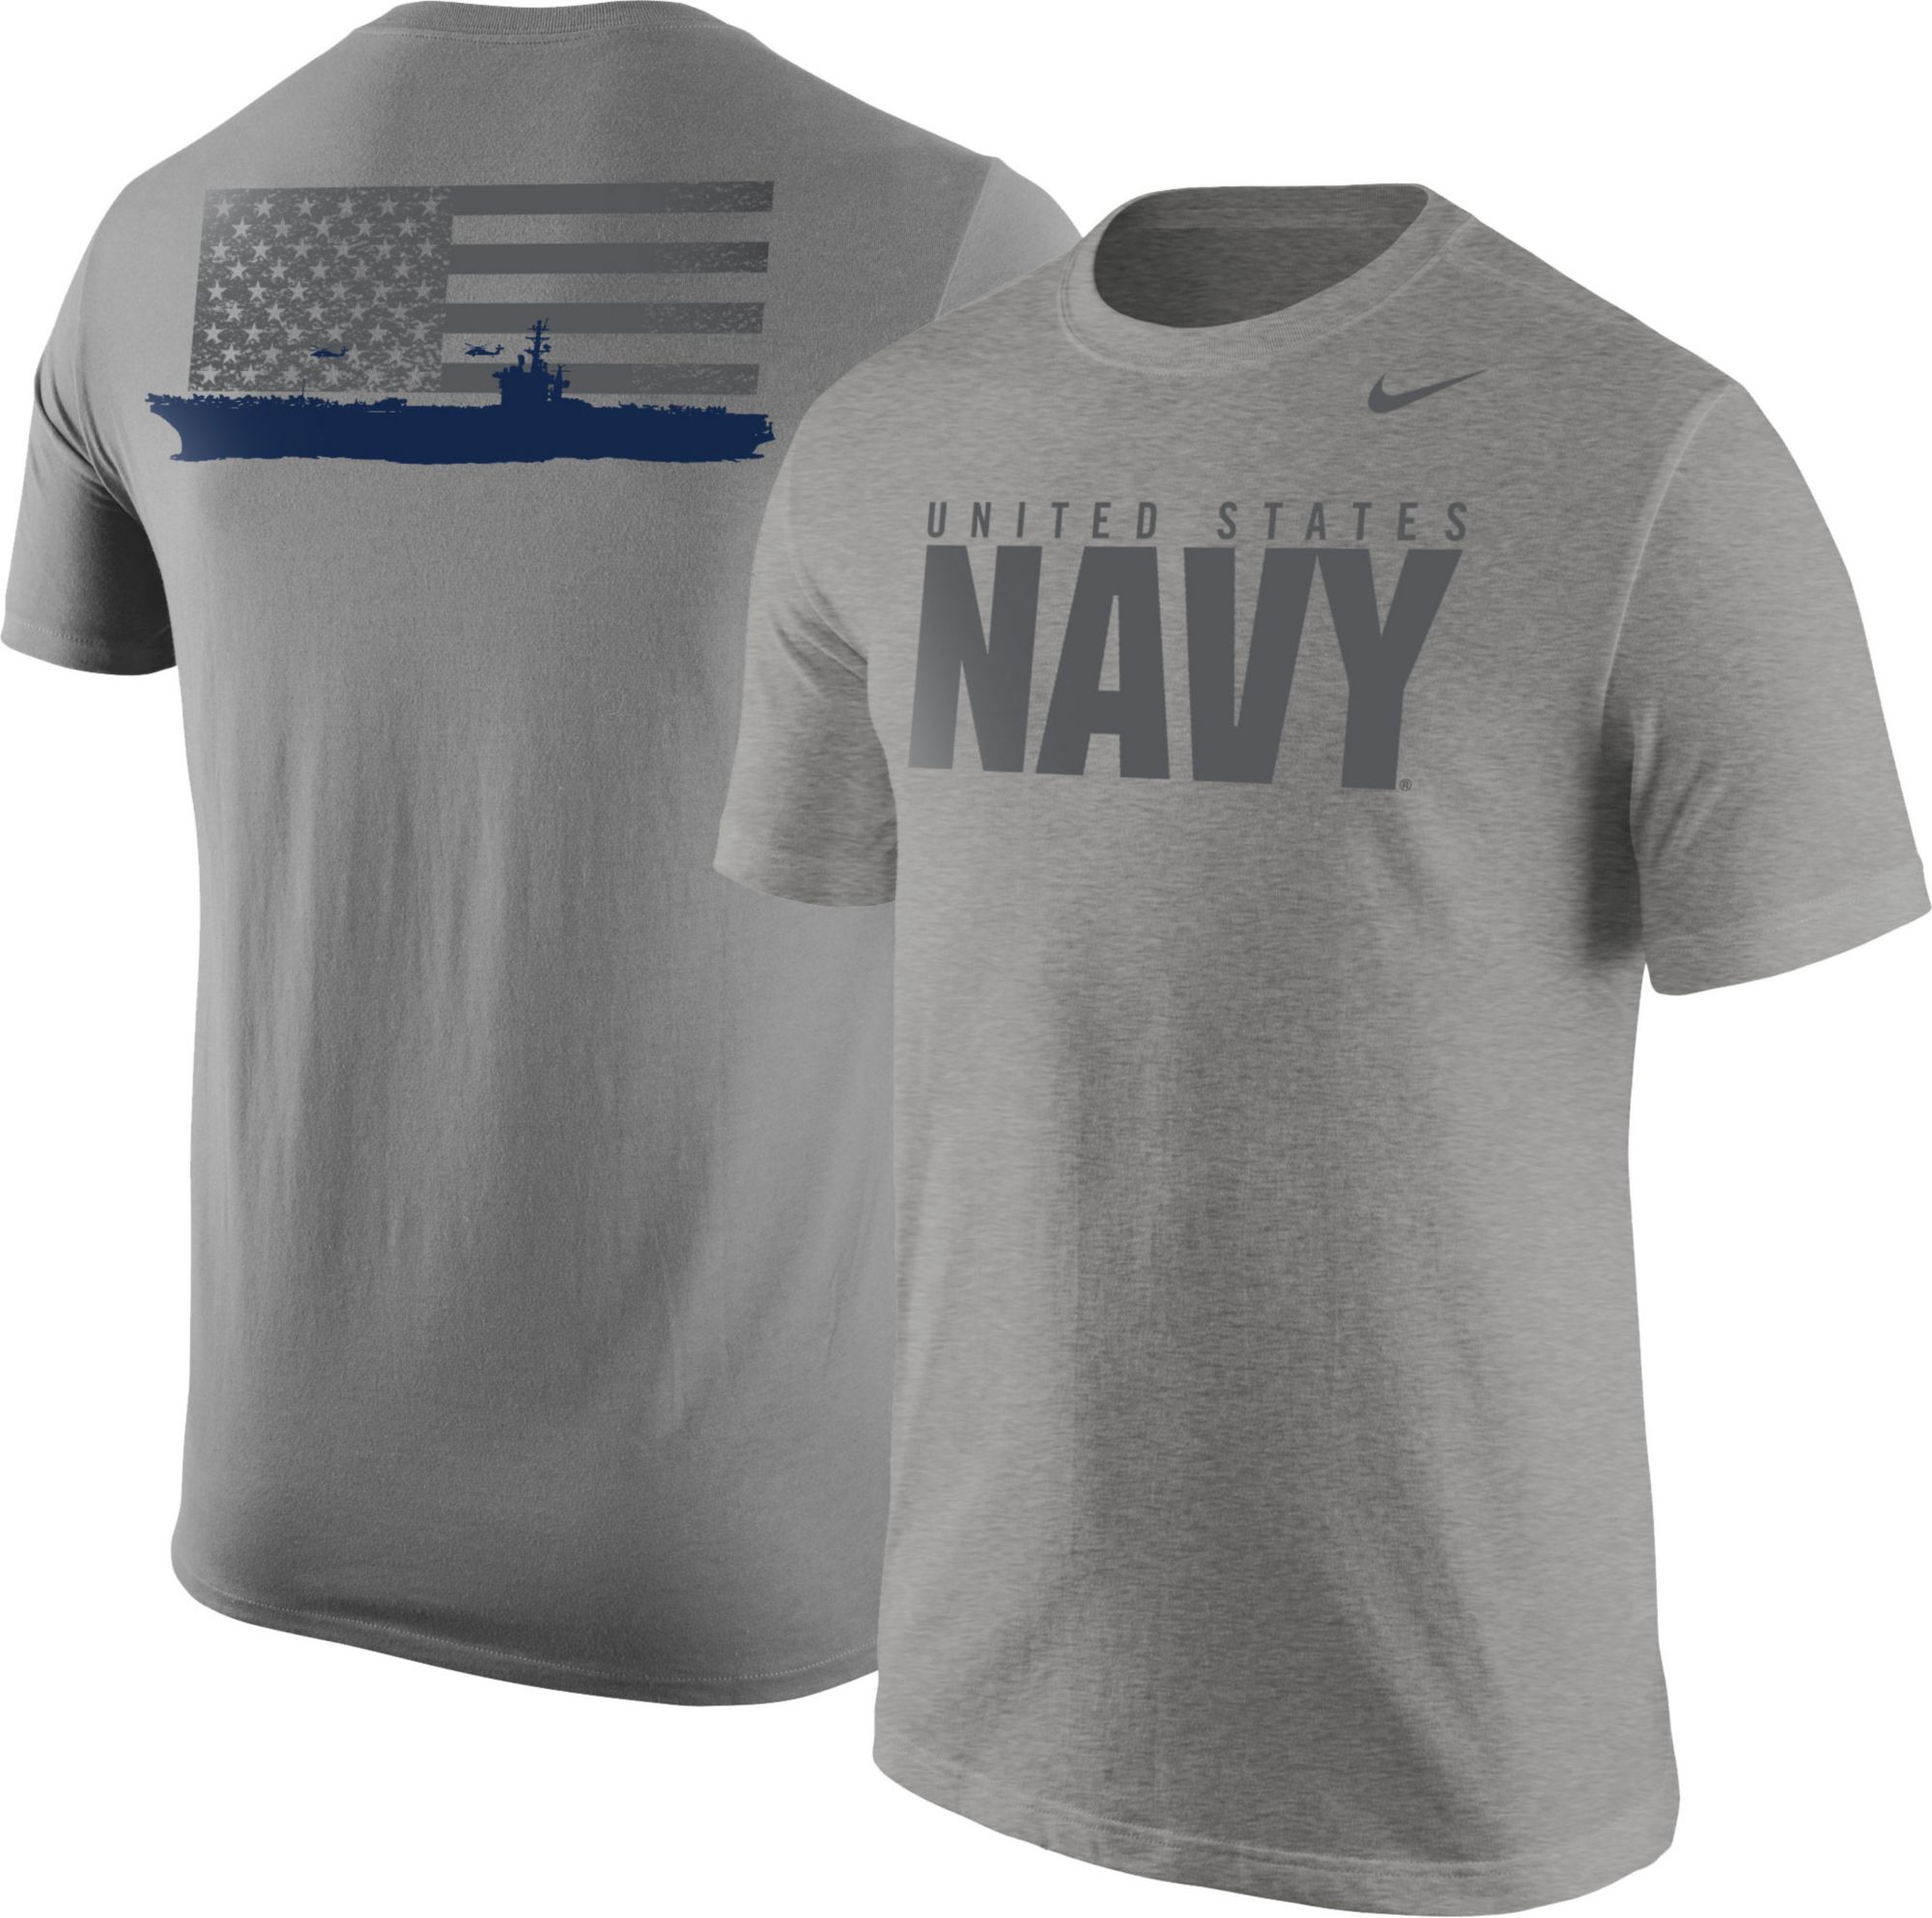 navy nike shirt